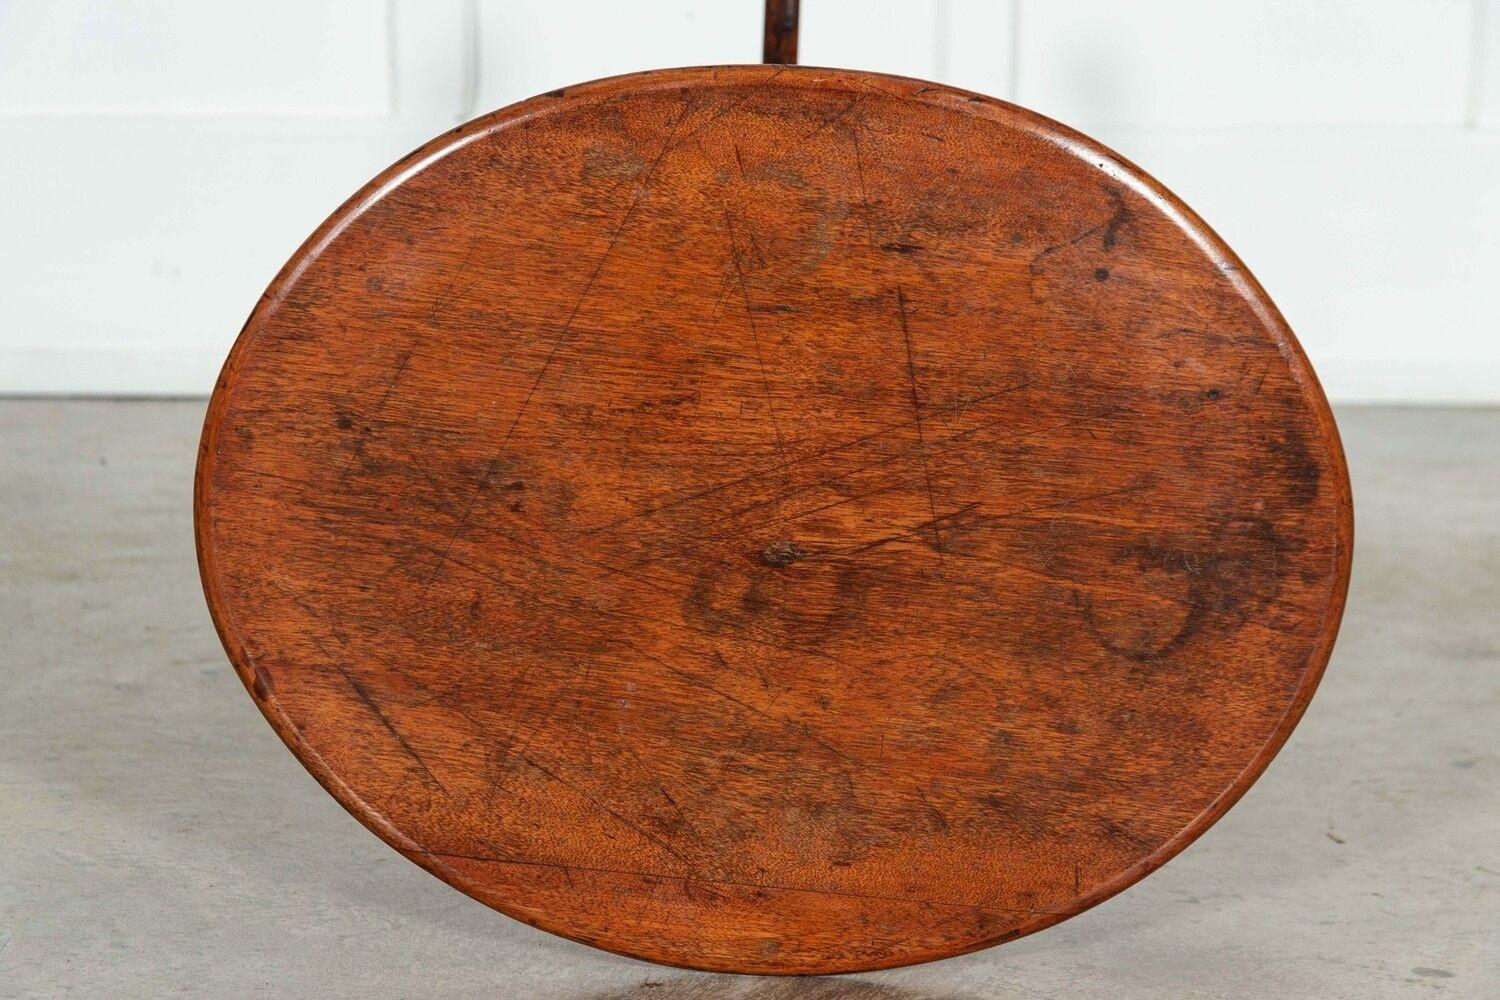 circa 1780
Irish 18thC Cherry Bobbin Tea Side Table
sku 1543
W55 x D44 x H73cm